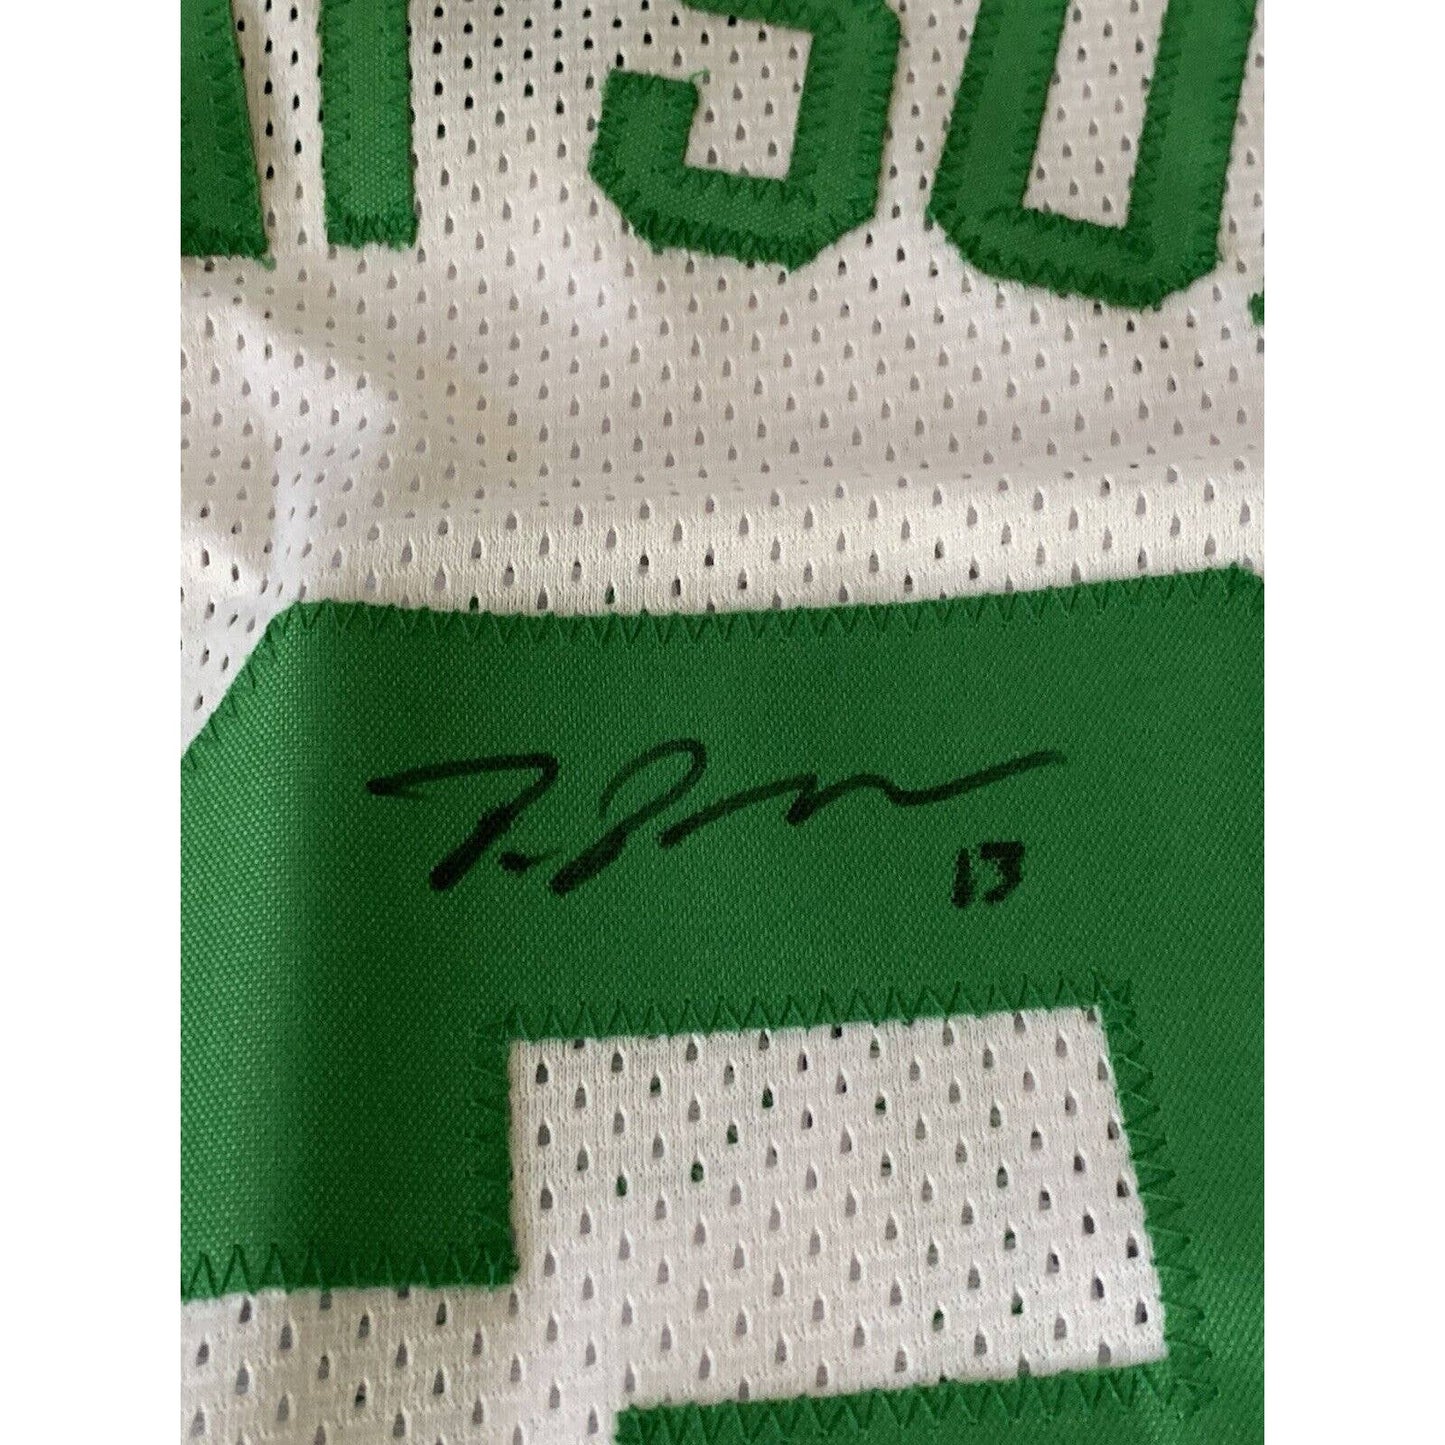 Tristan Thompson Autographed/Signed Jersey JSA COA Boston Celtics - TreasuresEvolved